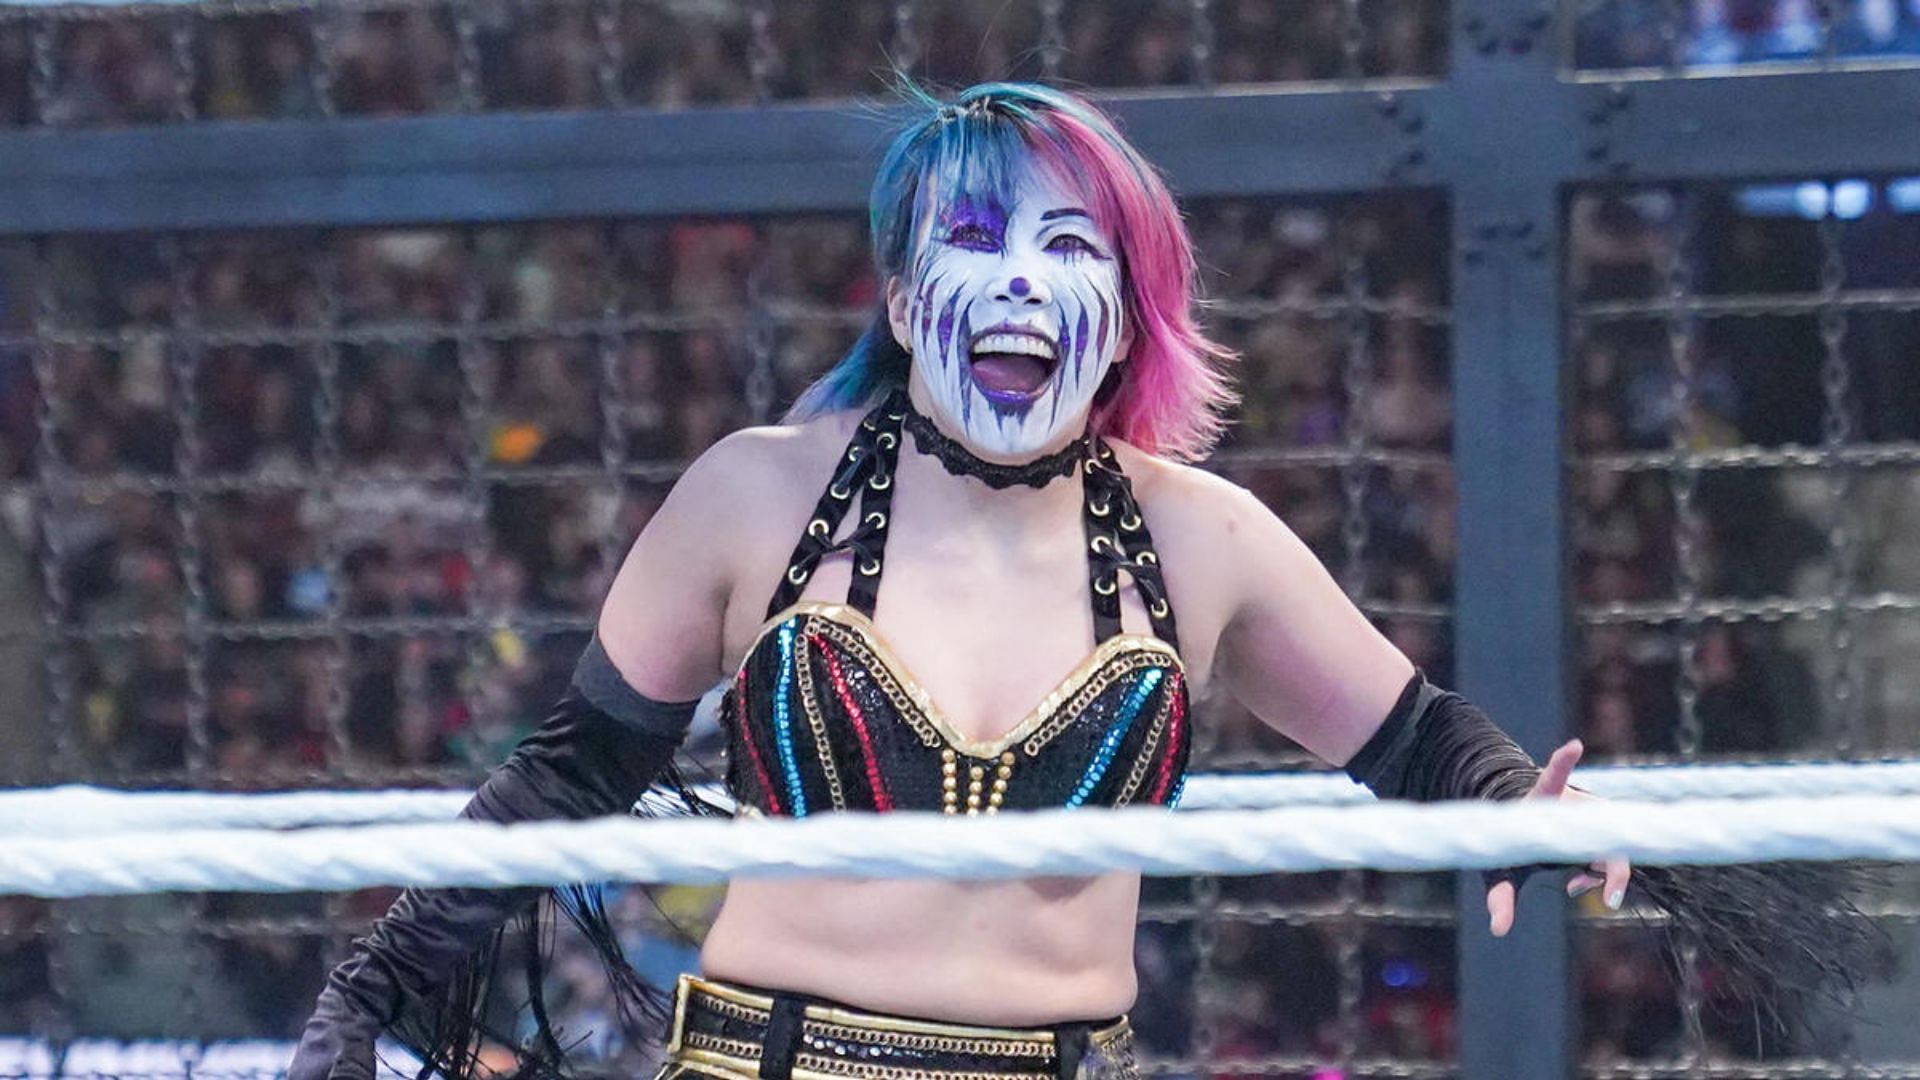 Asuka is a former WWE RAW Women